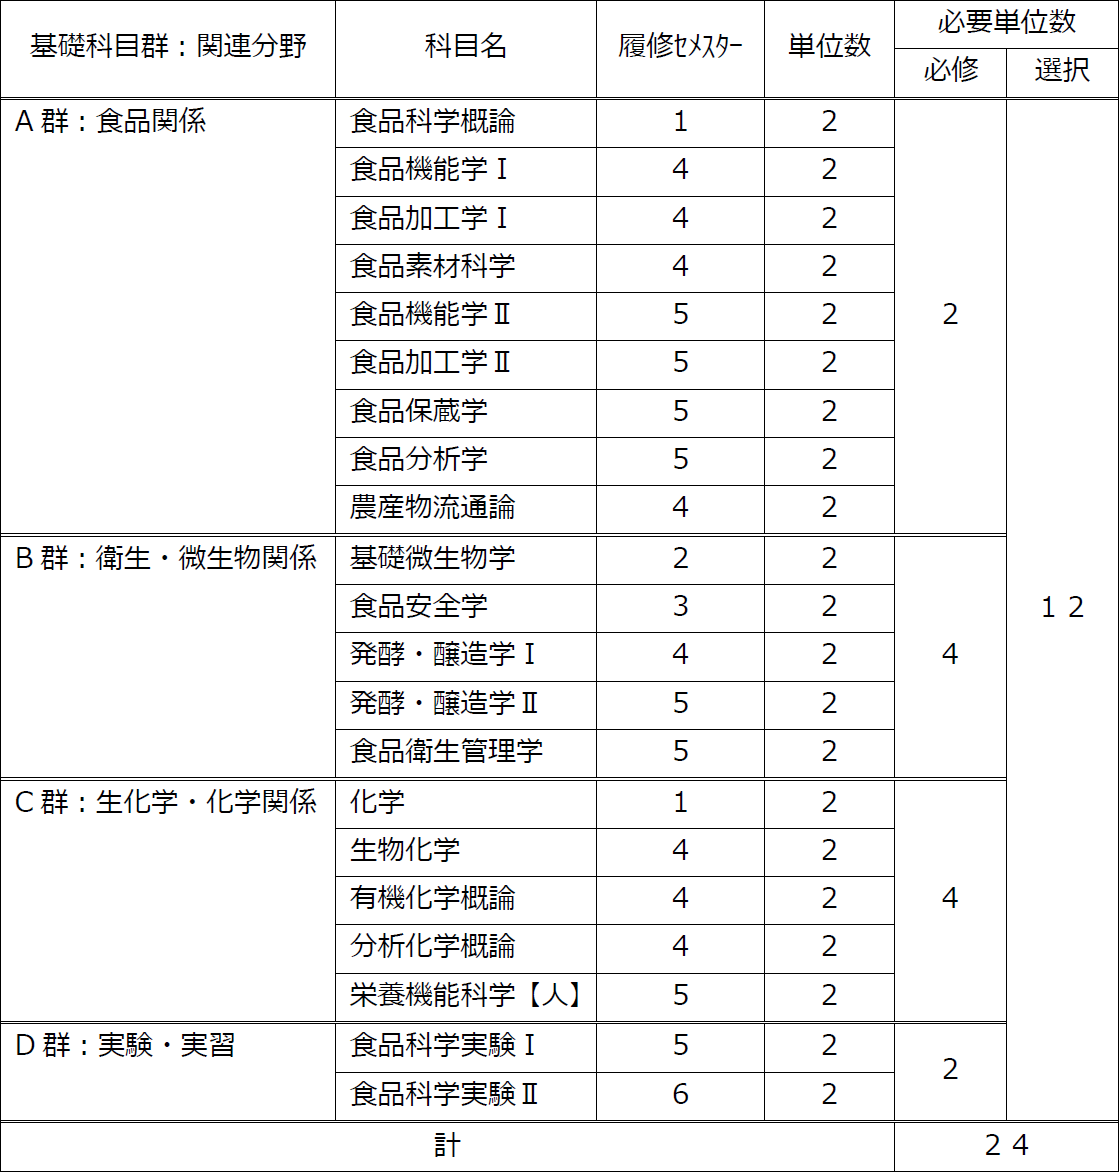 http://kyoumu.adb.fukushima-u.ac.jp/guide/2019/agri/Files/2020/01/HACCP%E7%AE%A1%E7%90%86%E8%80%85%E3%80%80%E8%A1%A8.png